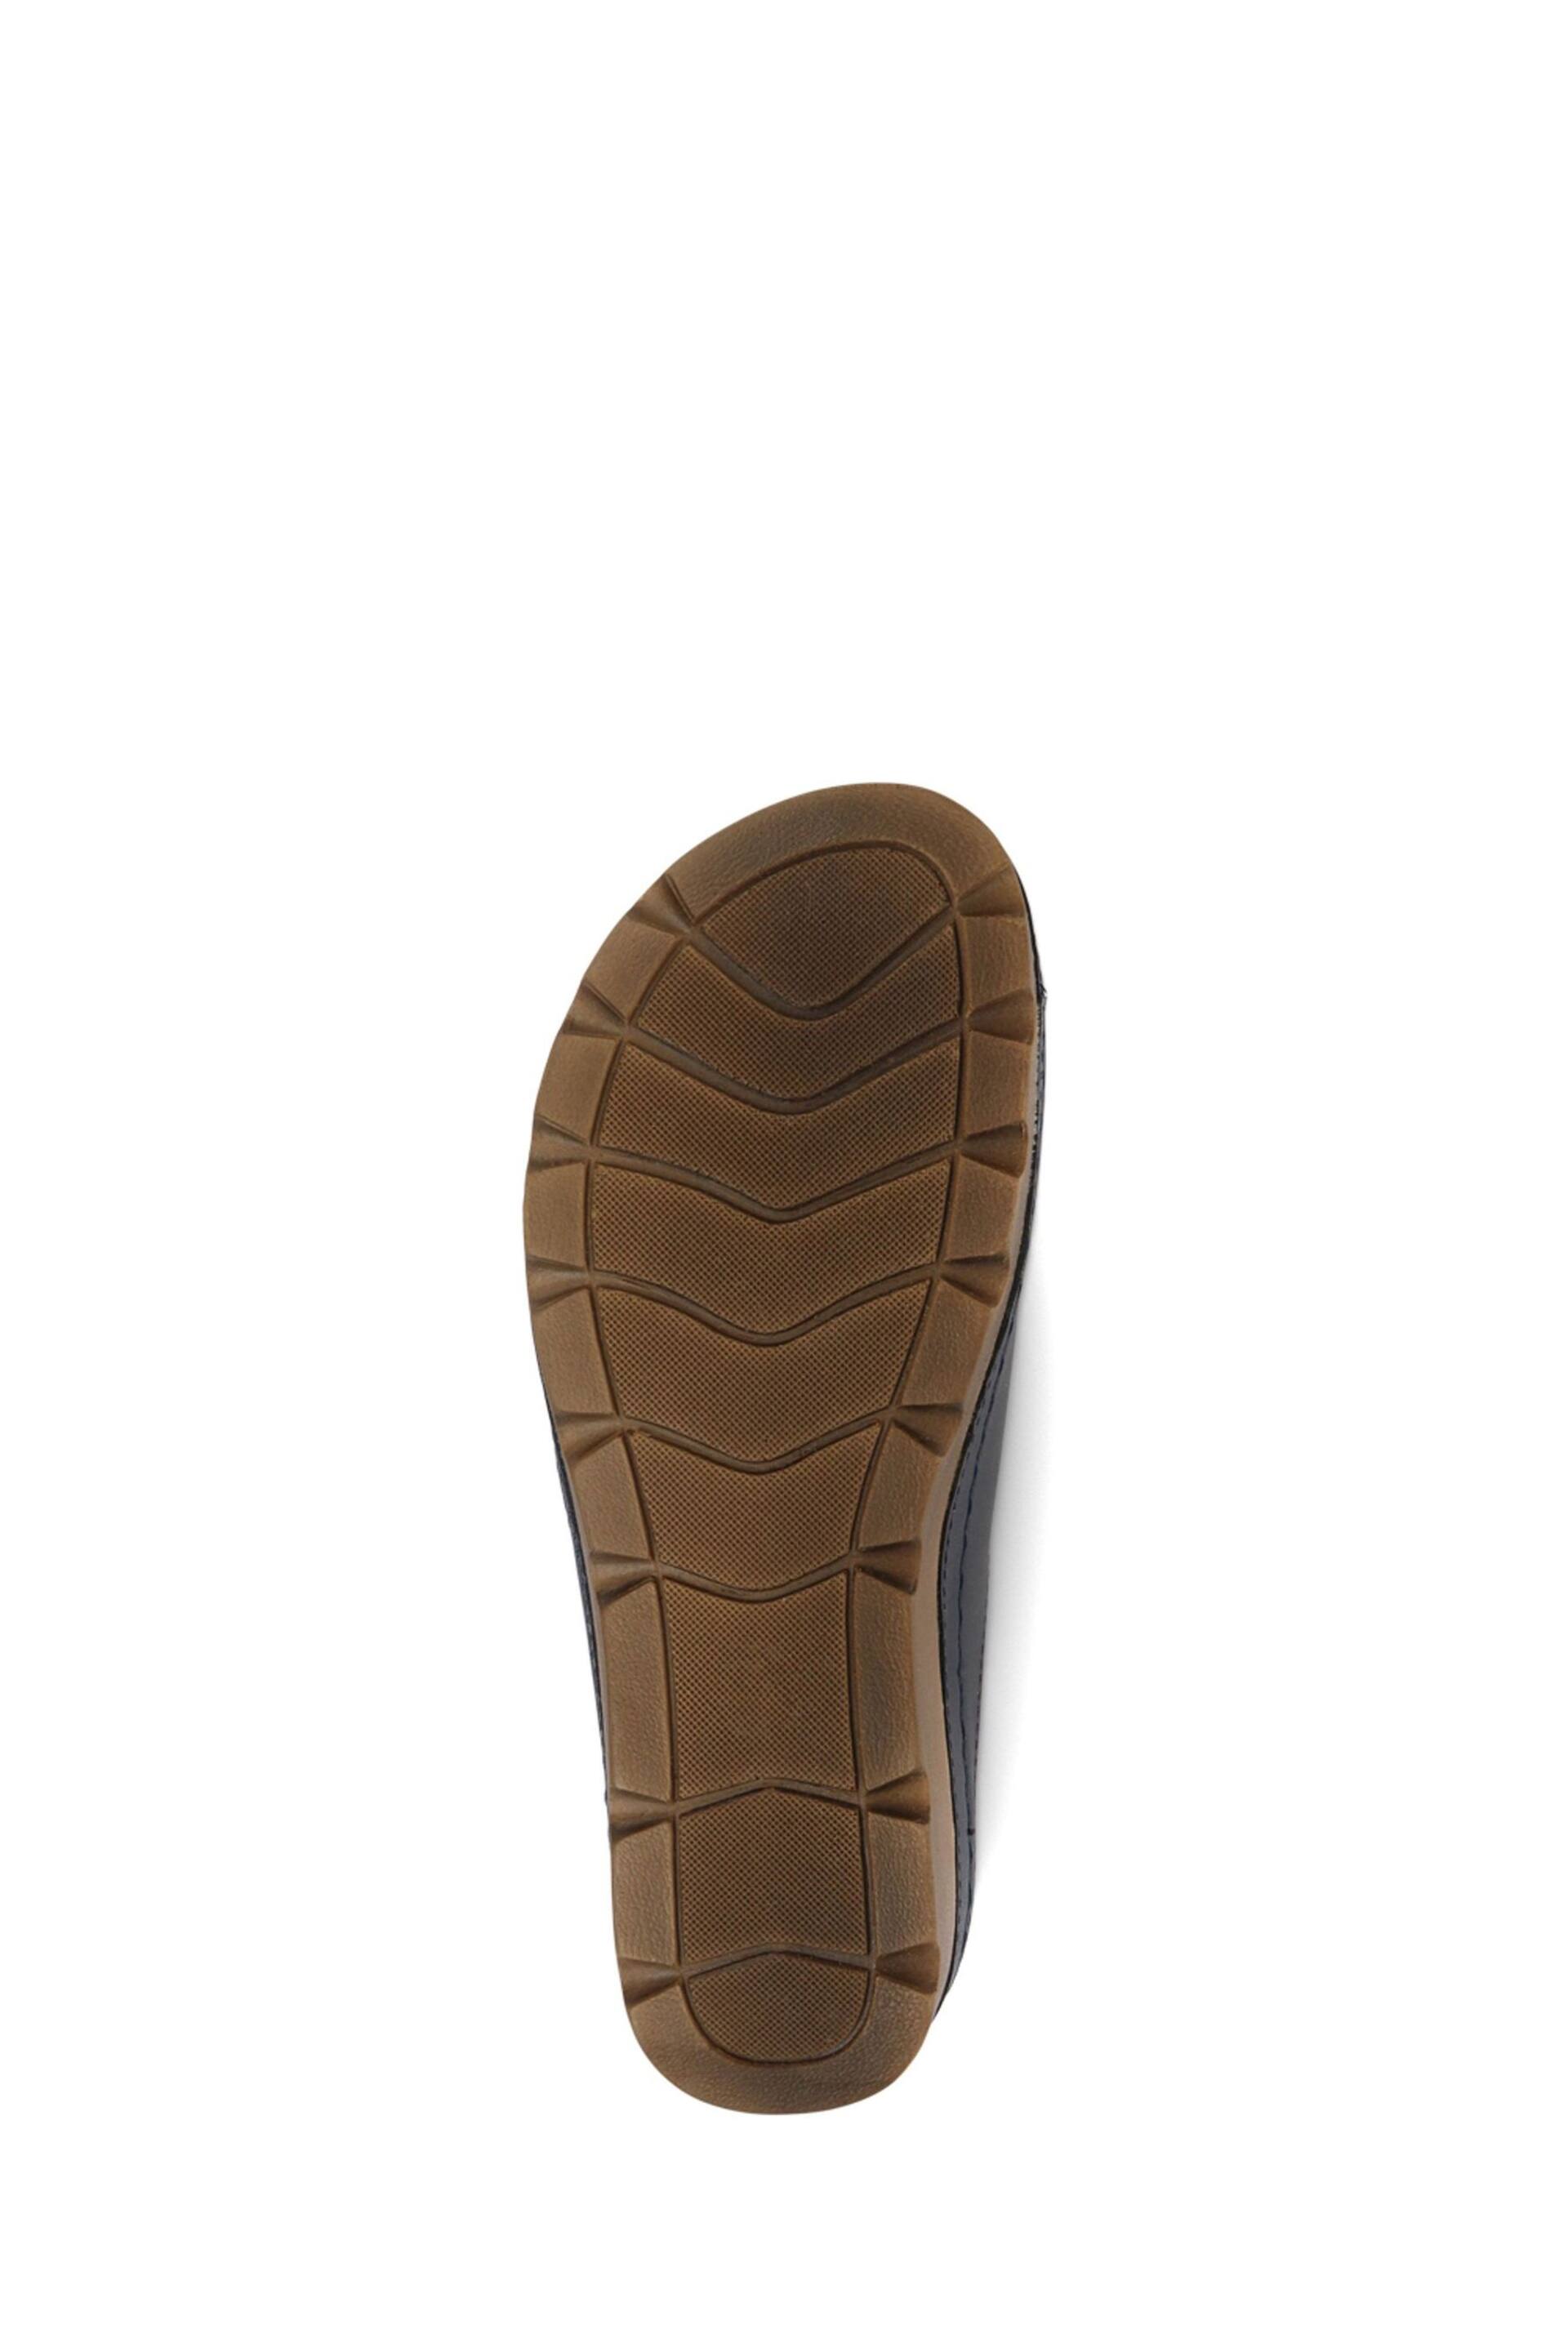 Pavers Adjustable Black Mule Sandals - Image 5 of 5